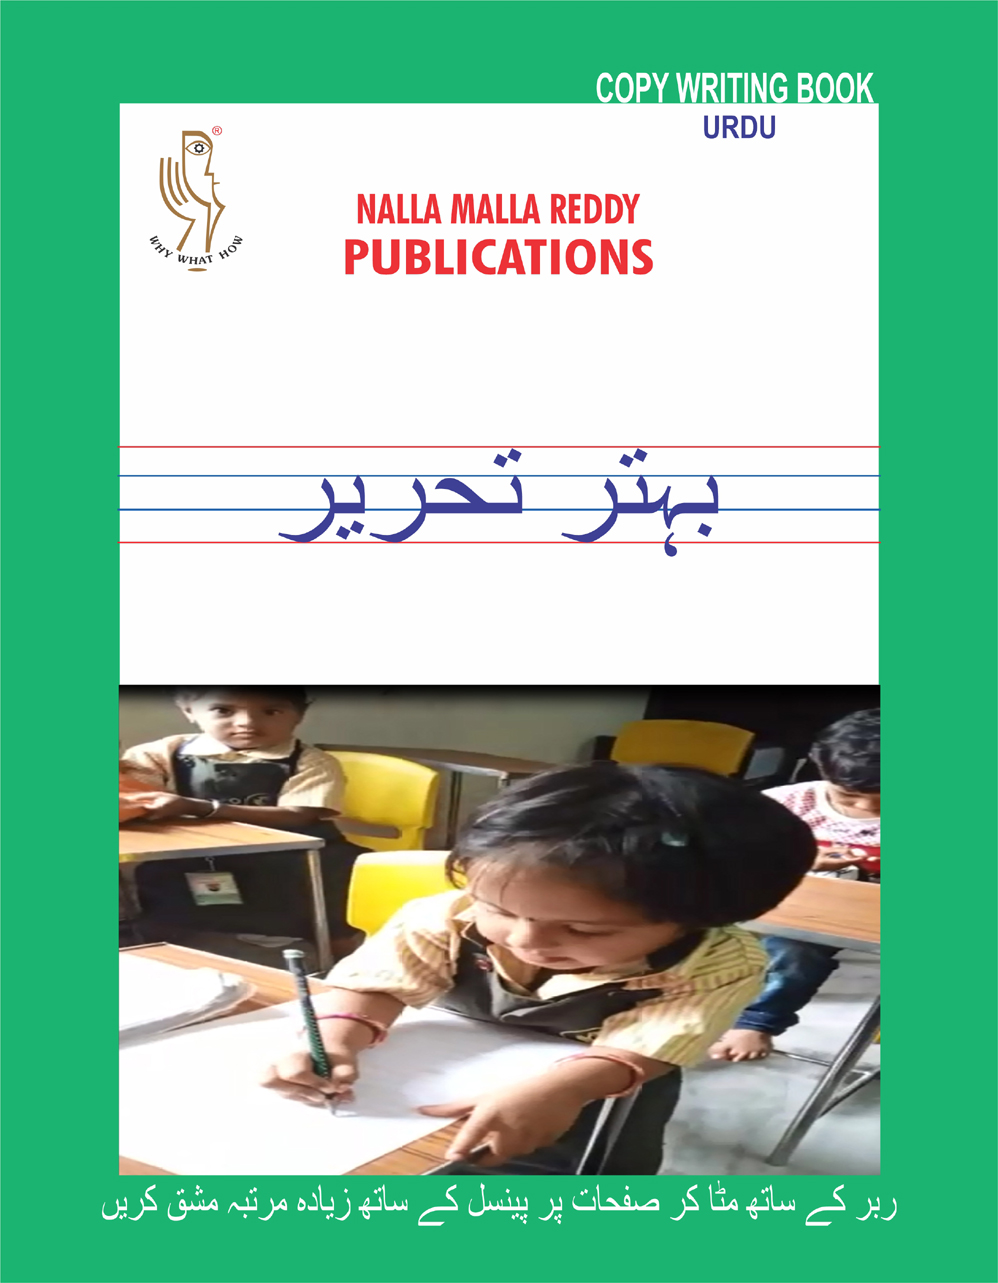 Urdu Copywriting book Tittle website